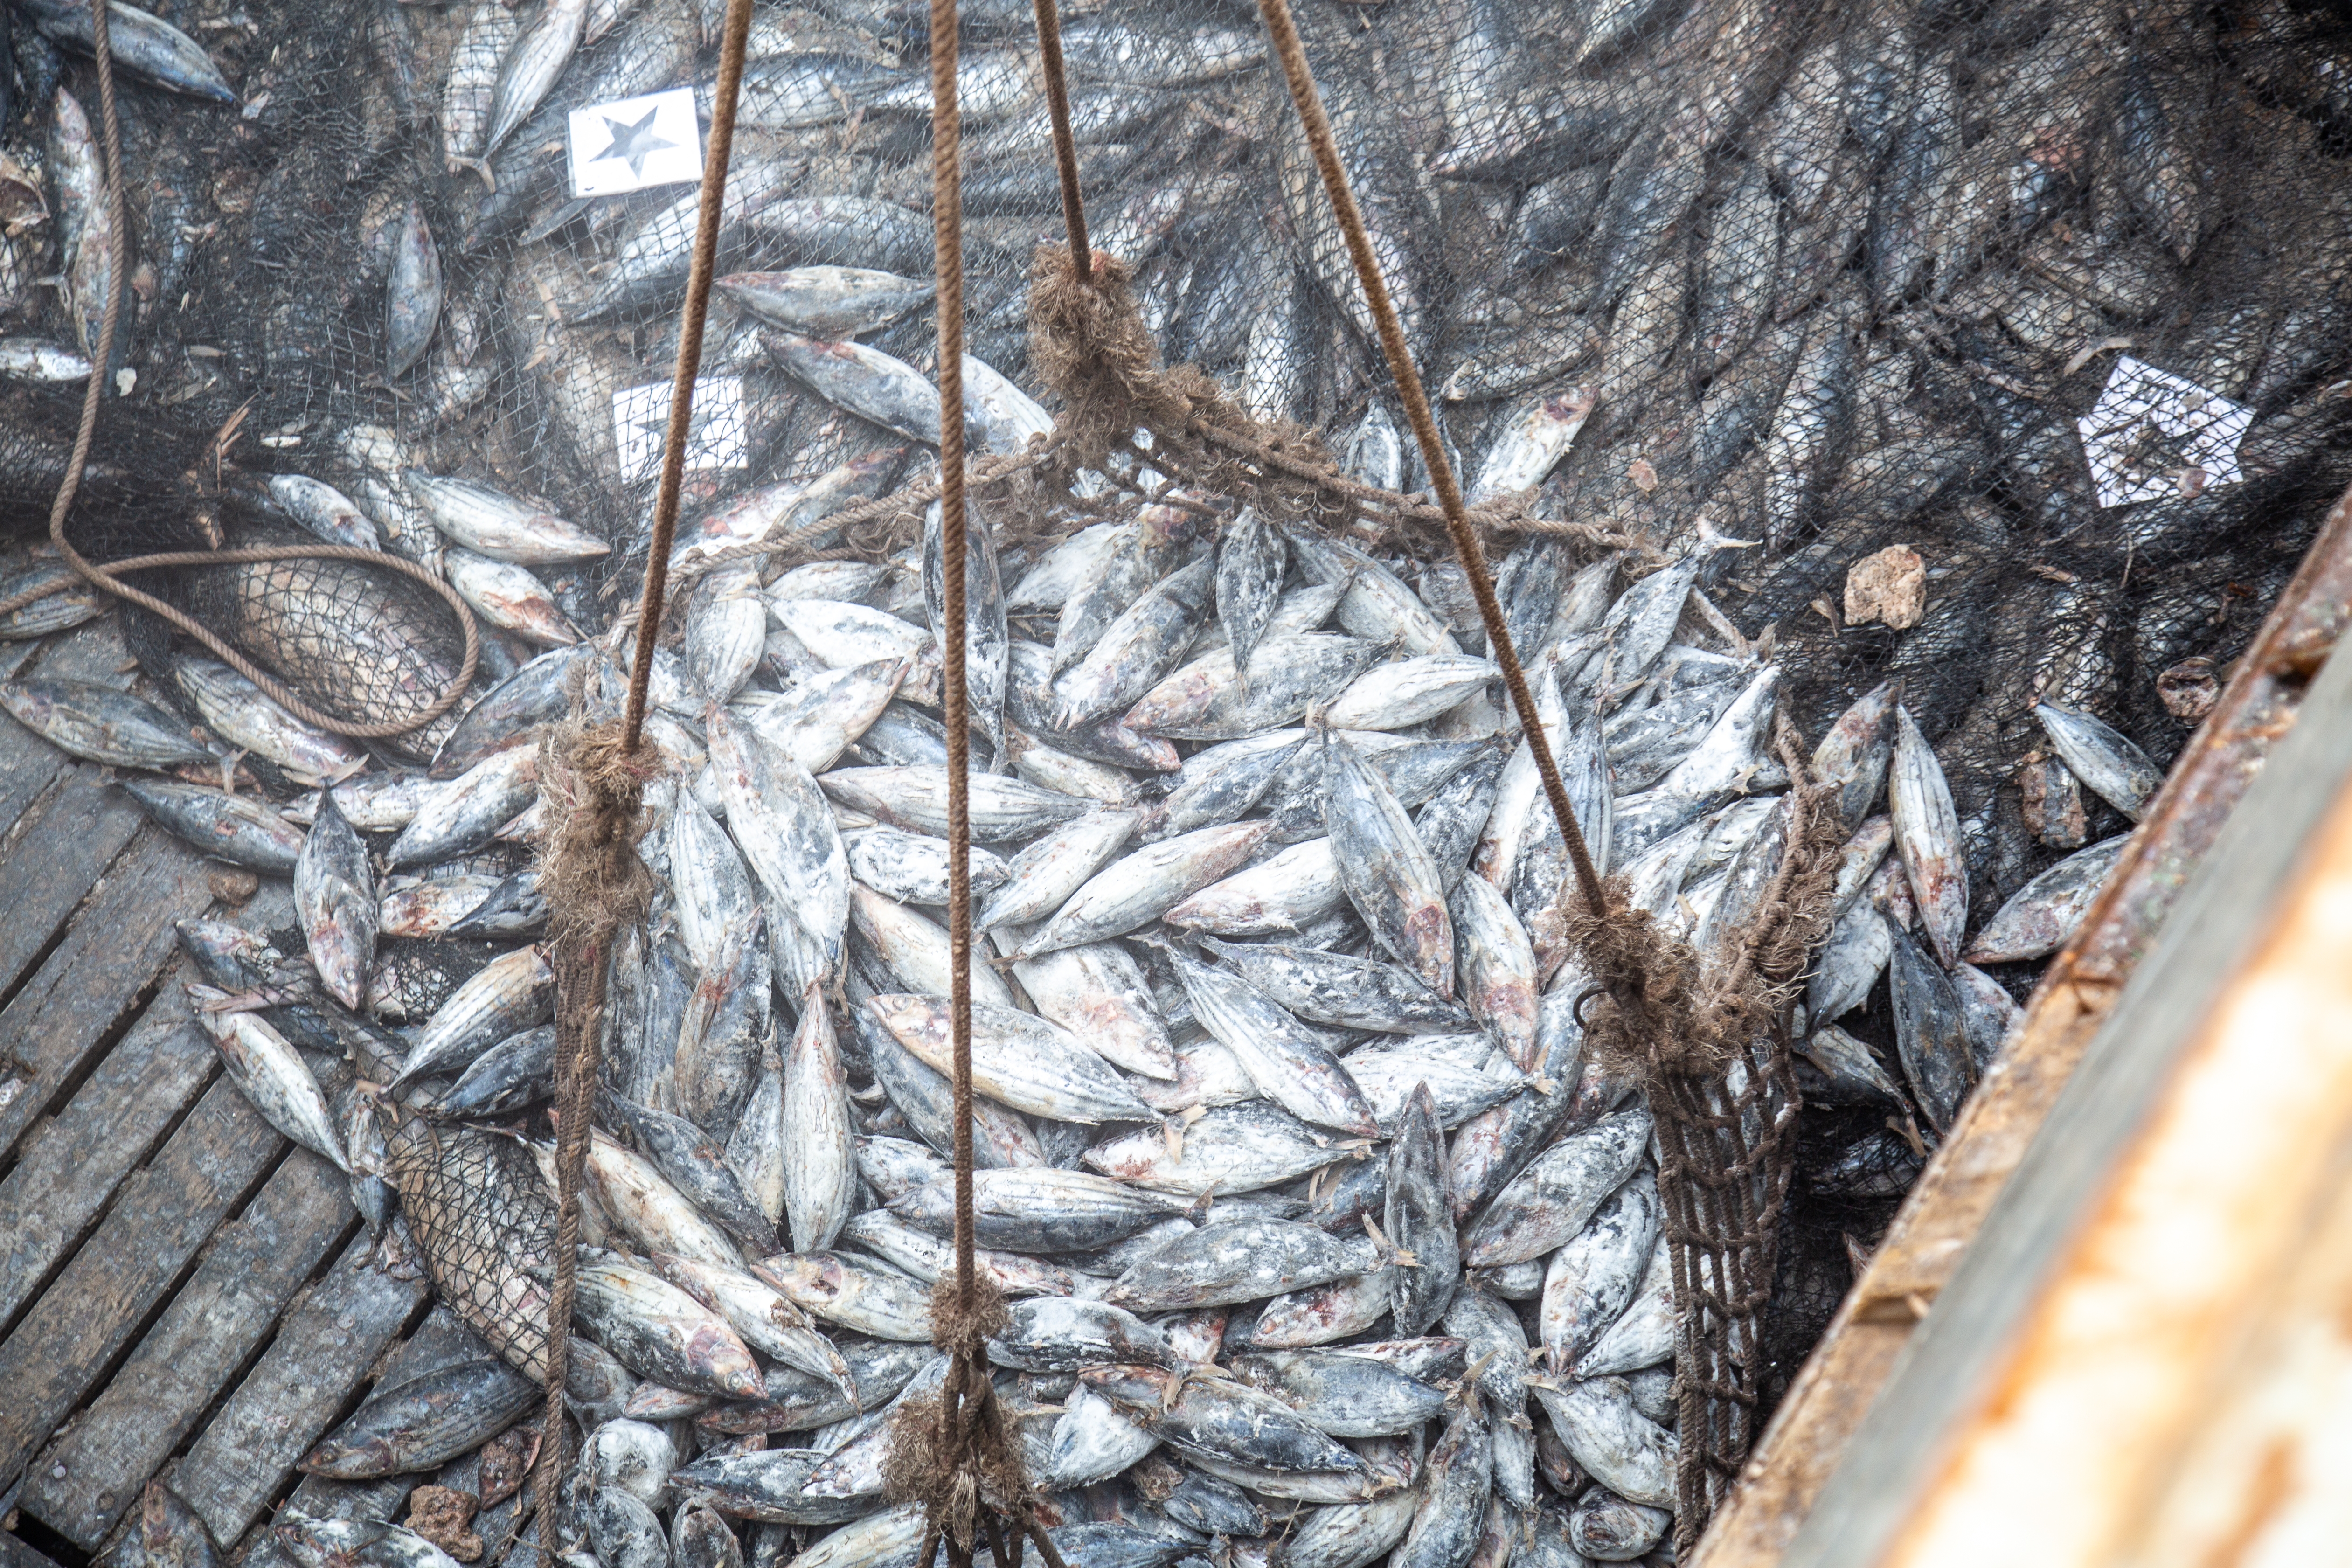 Illegal fishing fleet blacklisted in Indian Ocean to safeguard tuna